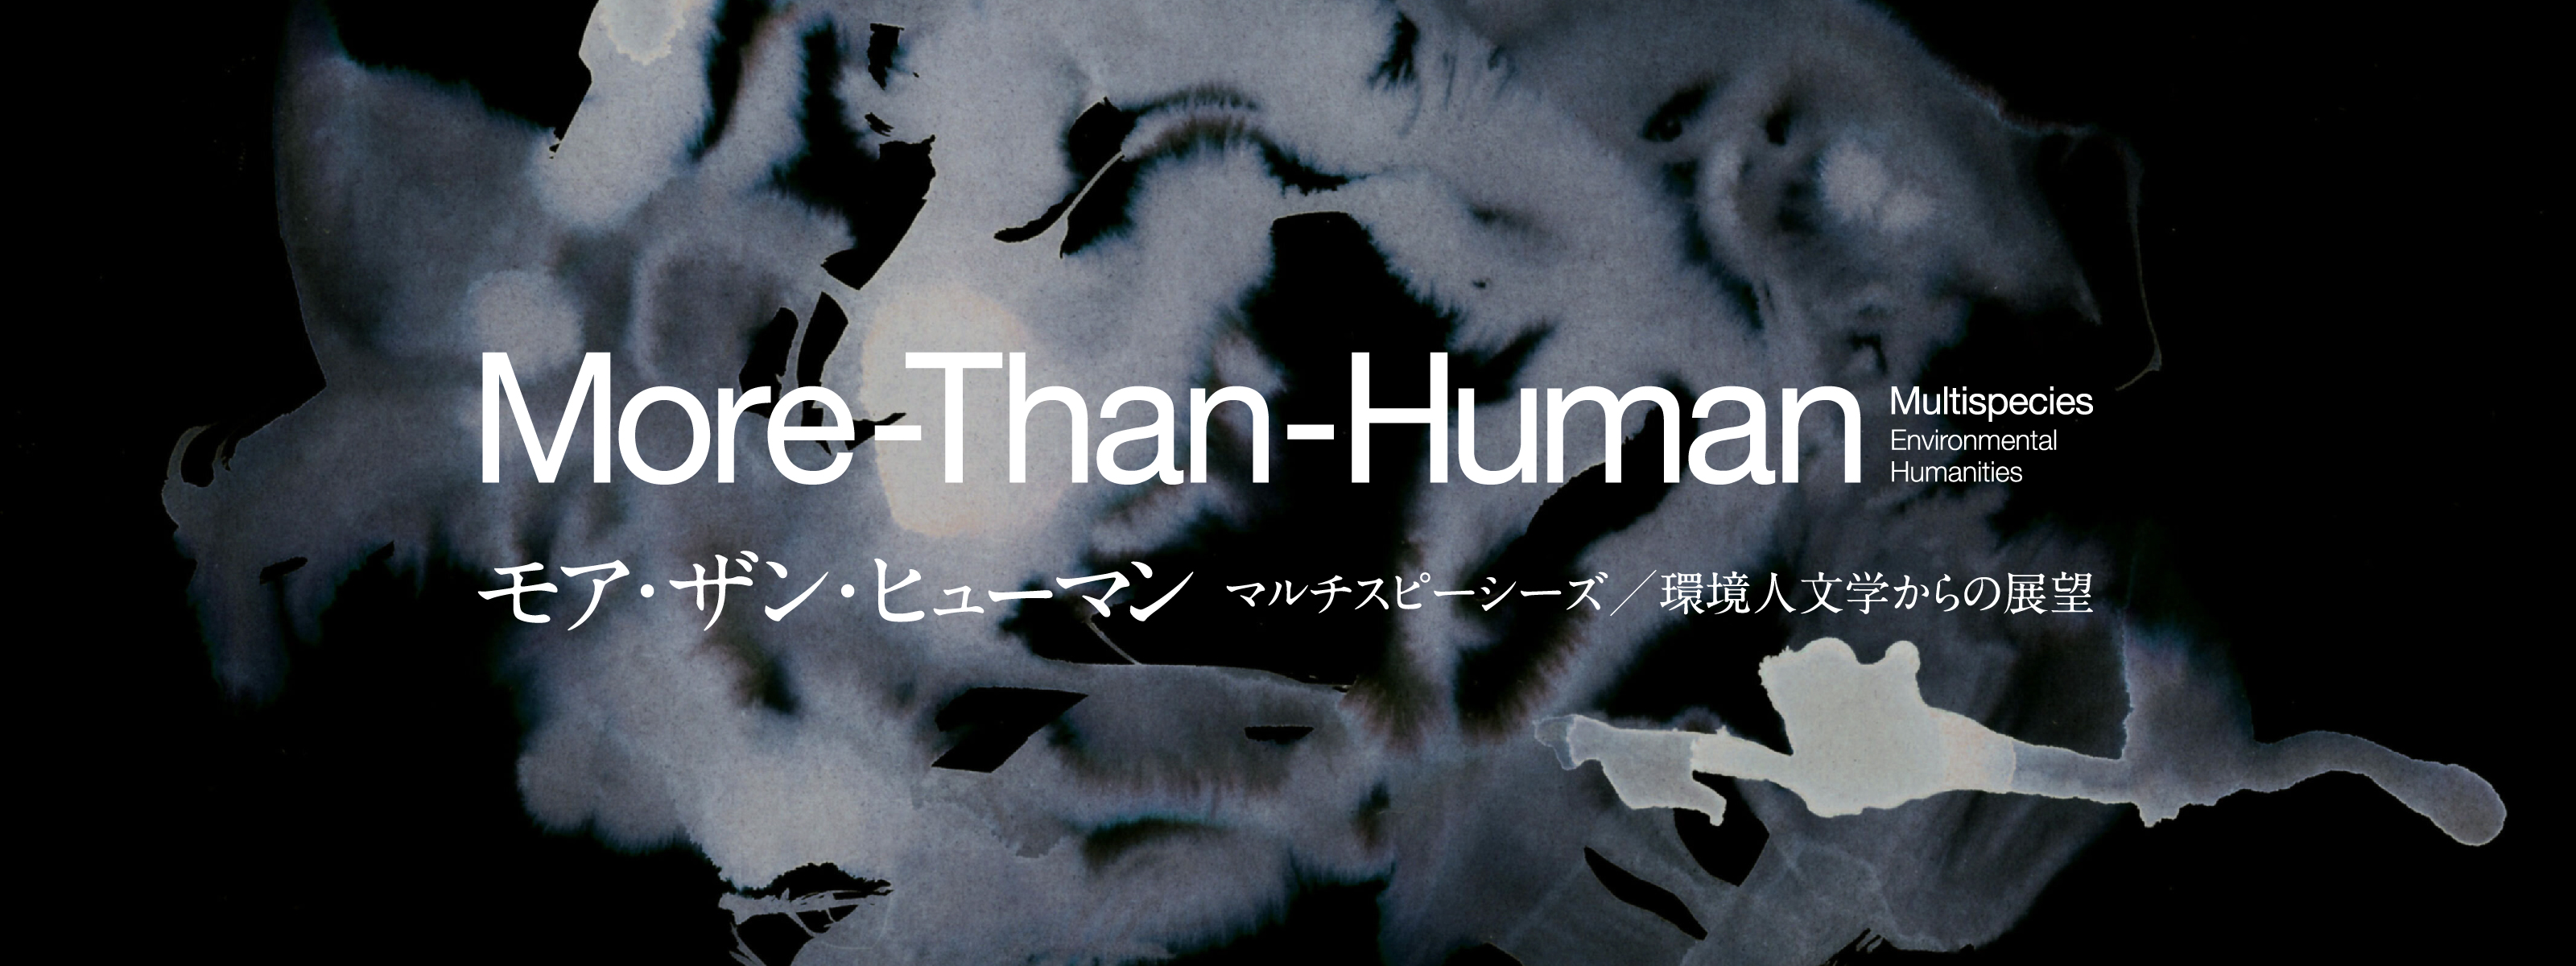 「More-Than-Human」特設サイト